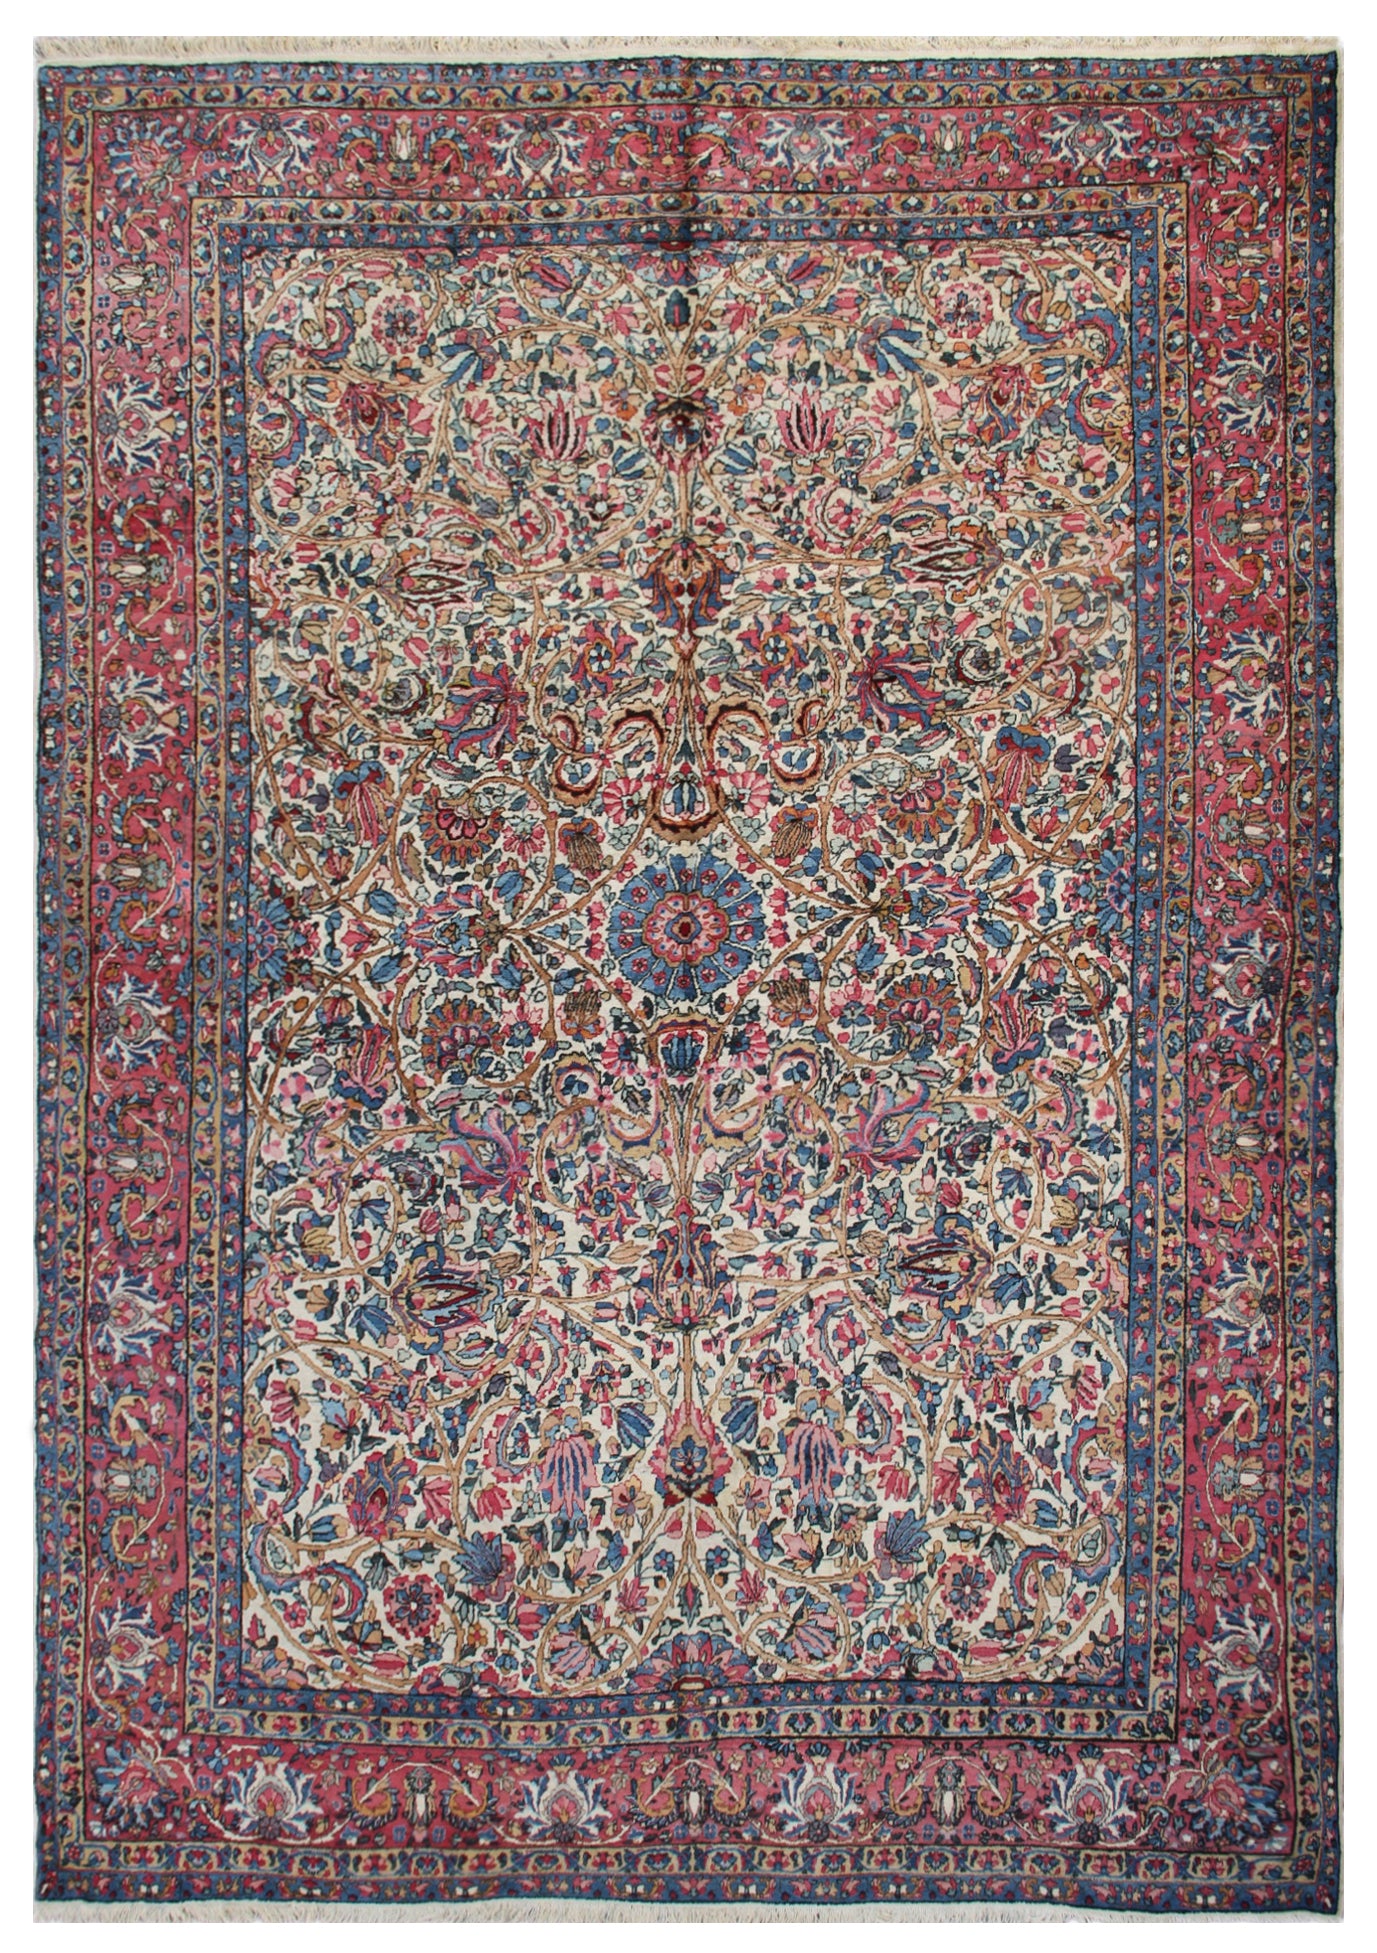 9'x12' Ivory Pink Blue Antique Persia Kerman Rug